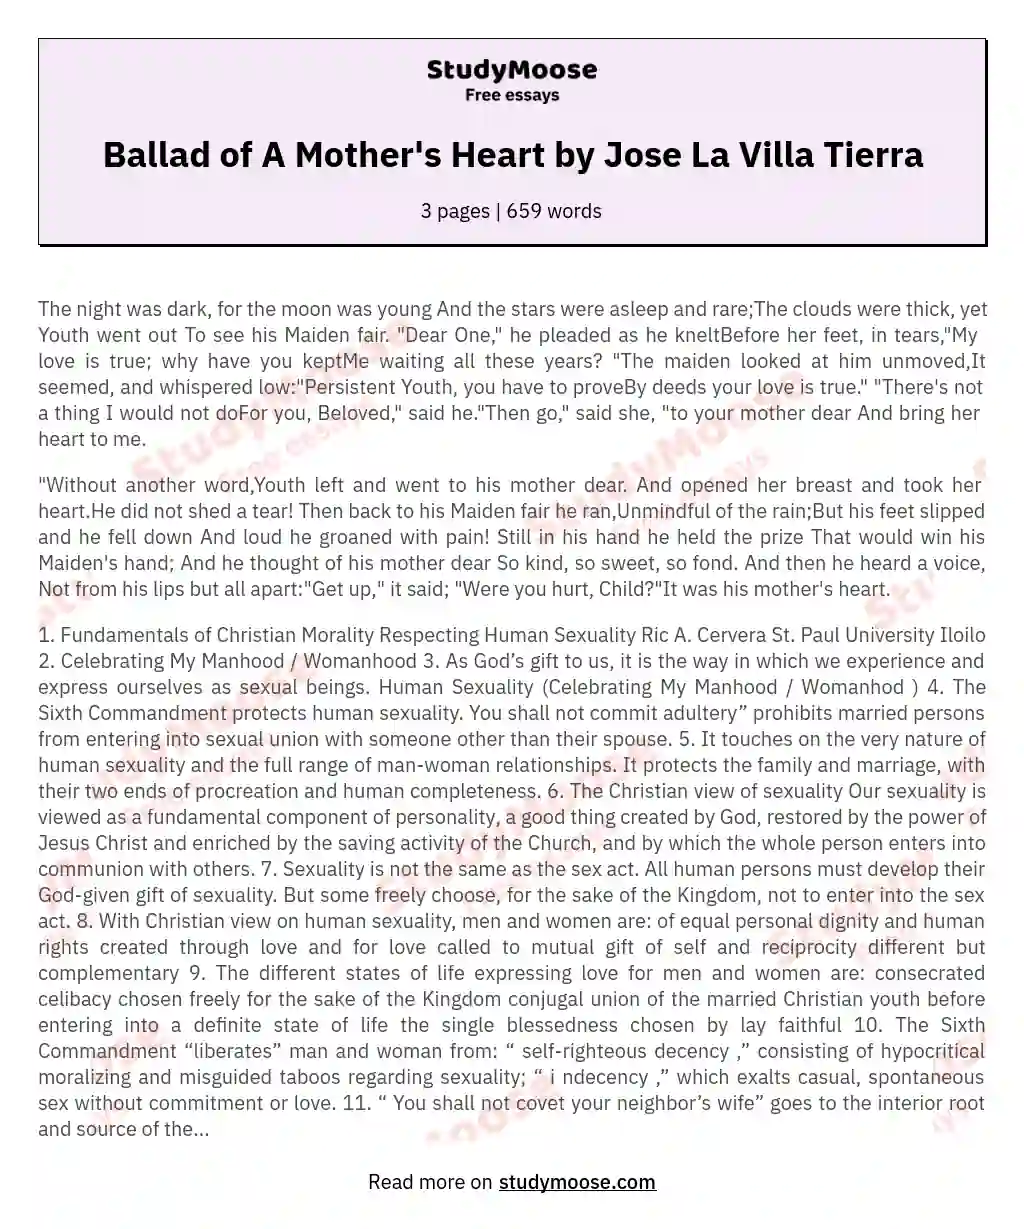 Ballad of A Mother's Heart by Jose La Villa Tierra